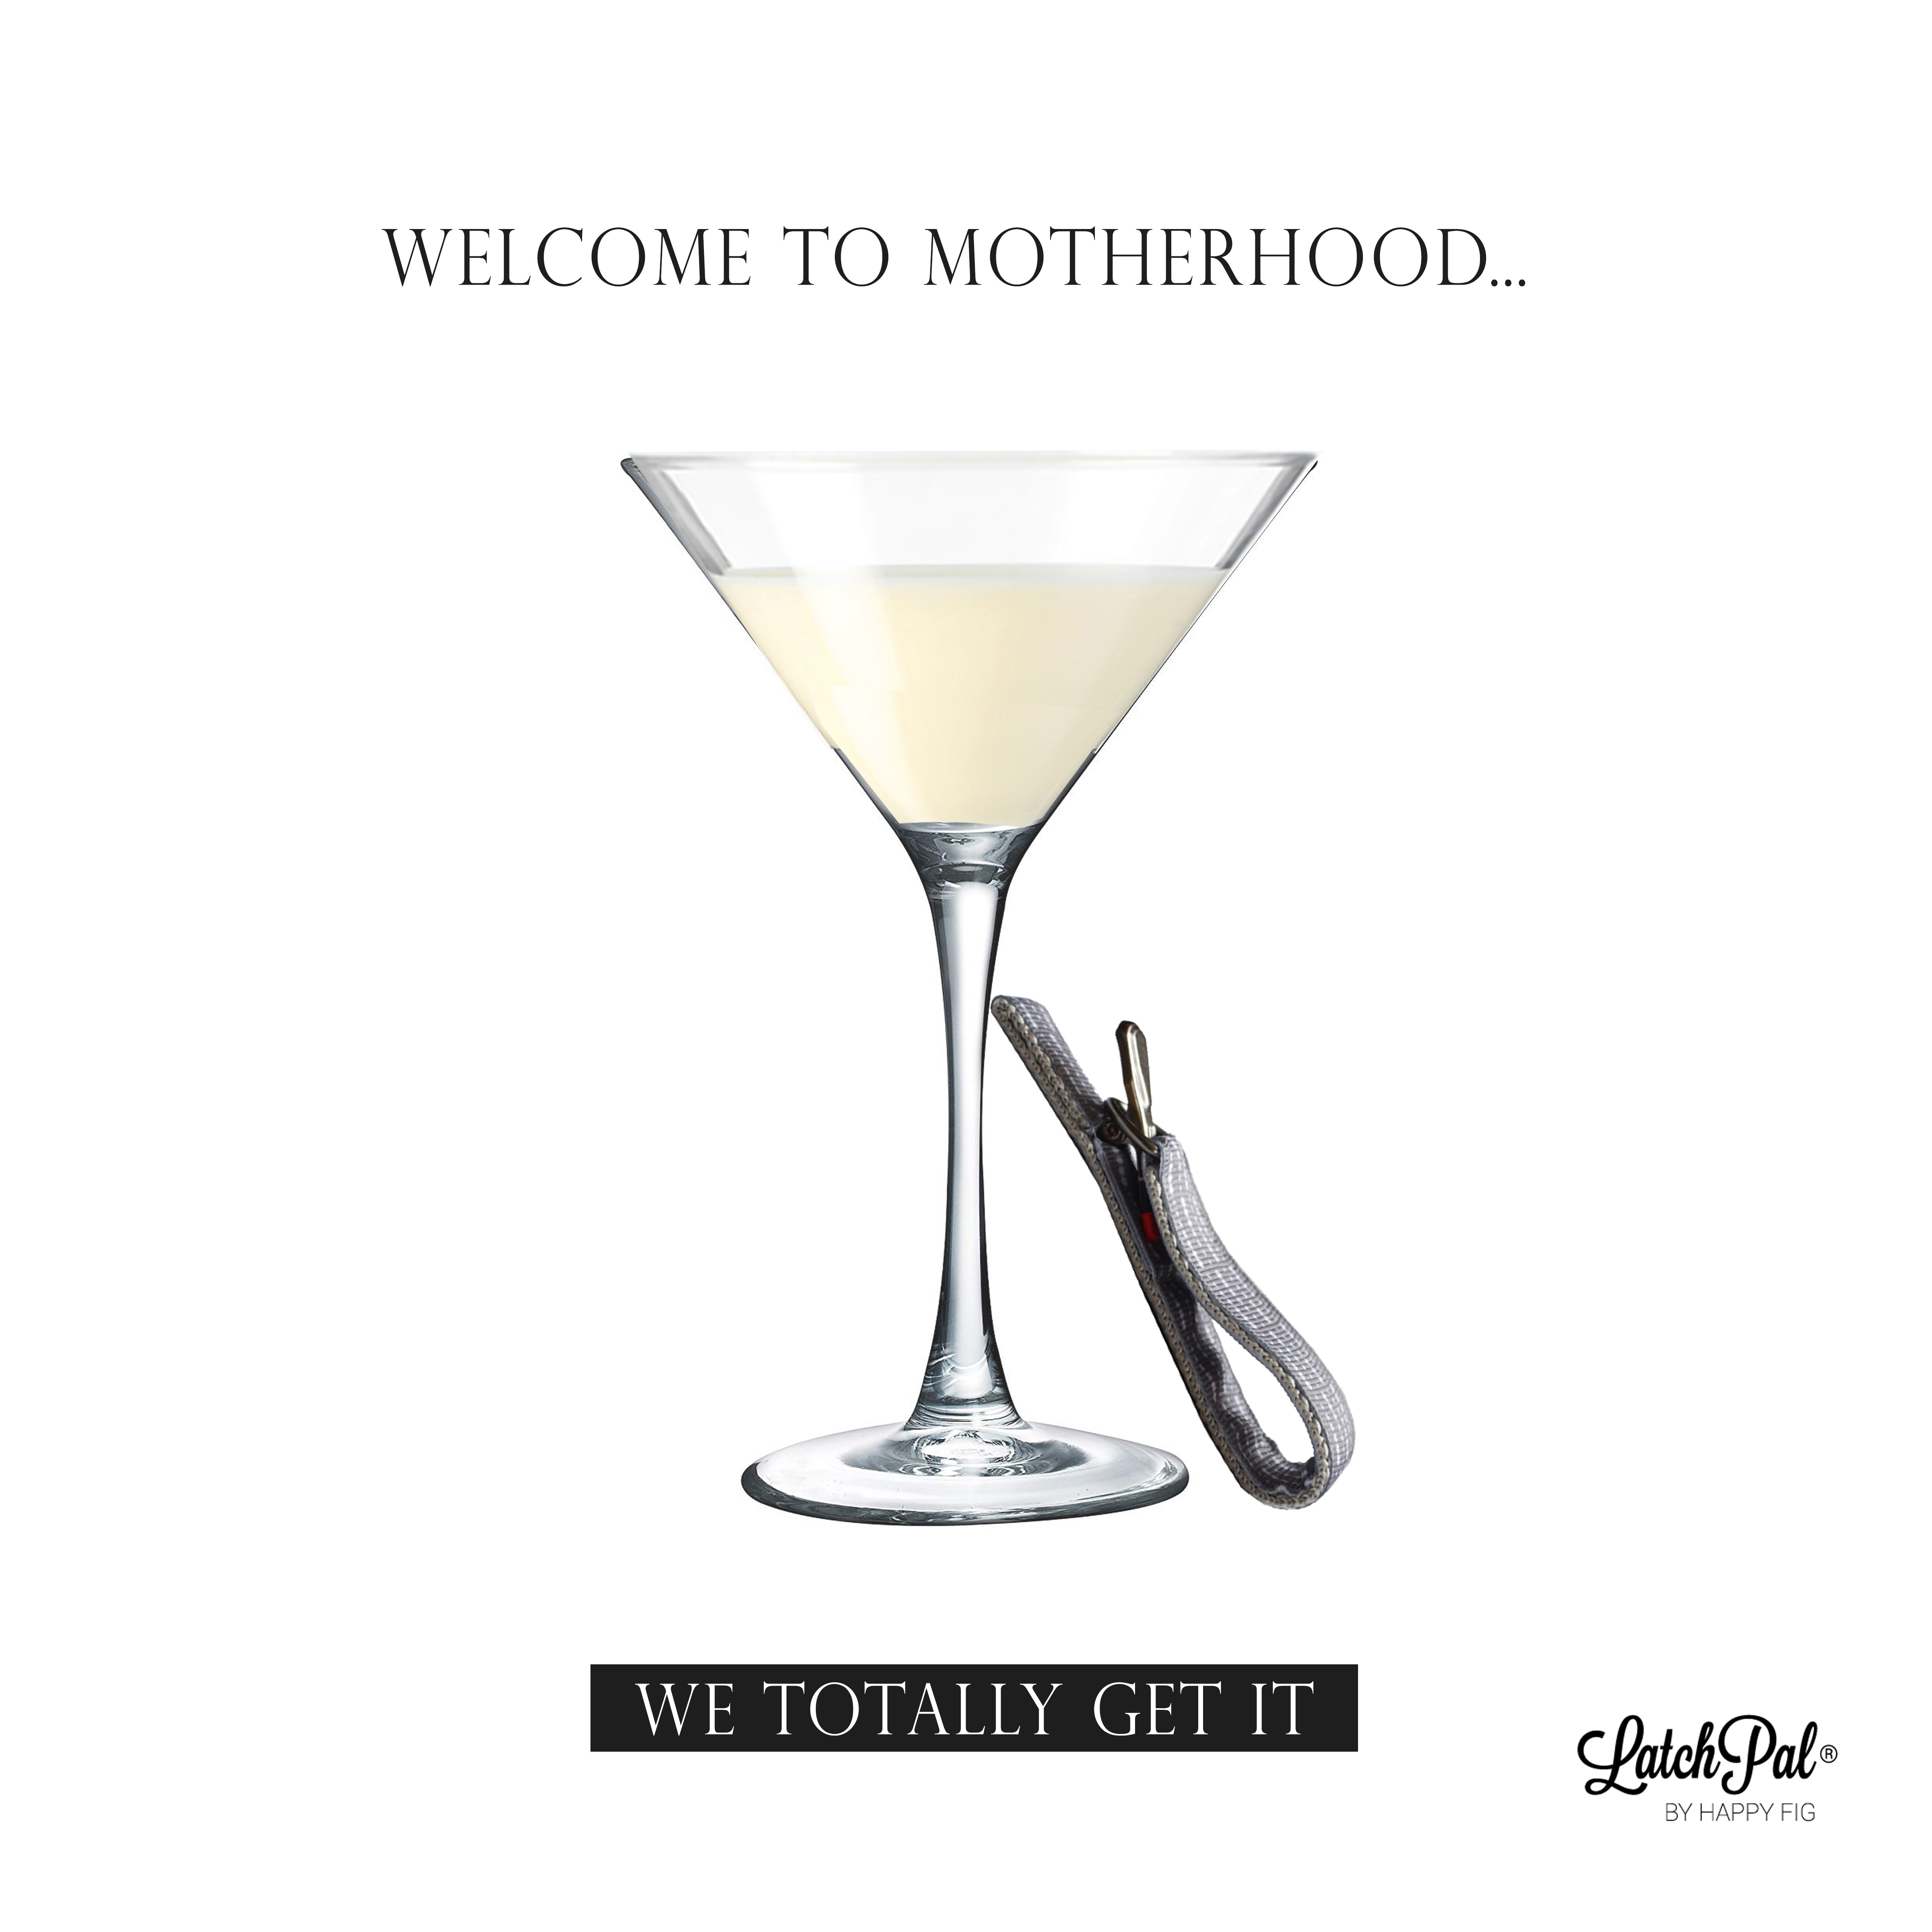 Welcome to Motherhood. Let the journey begin!